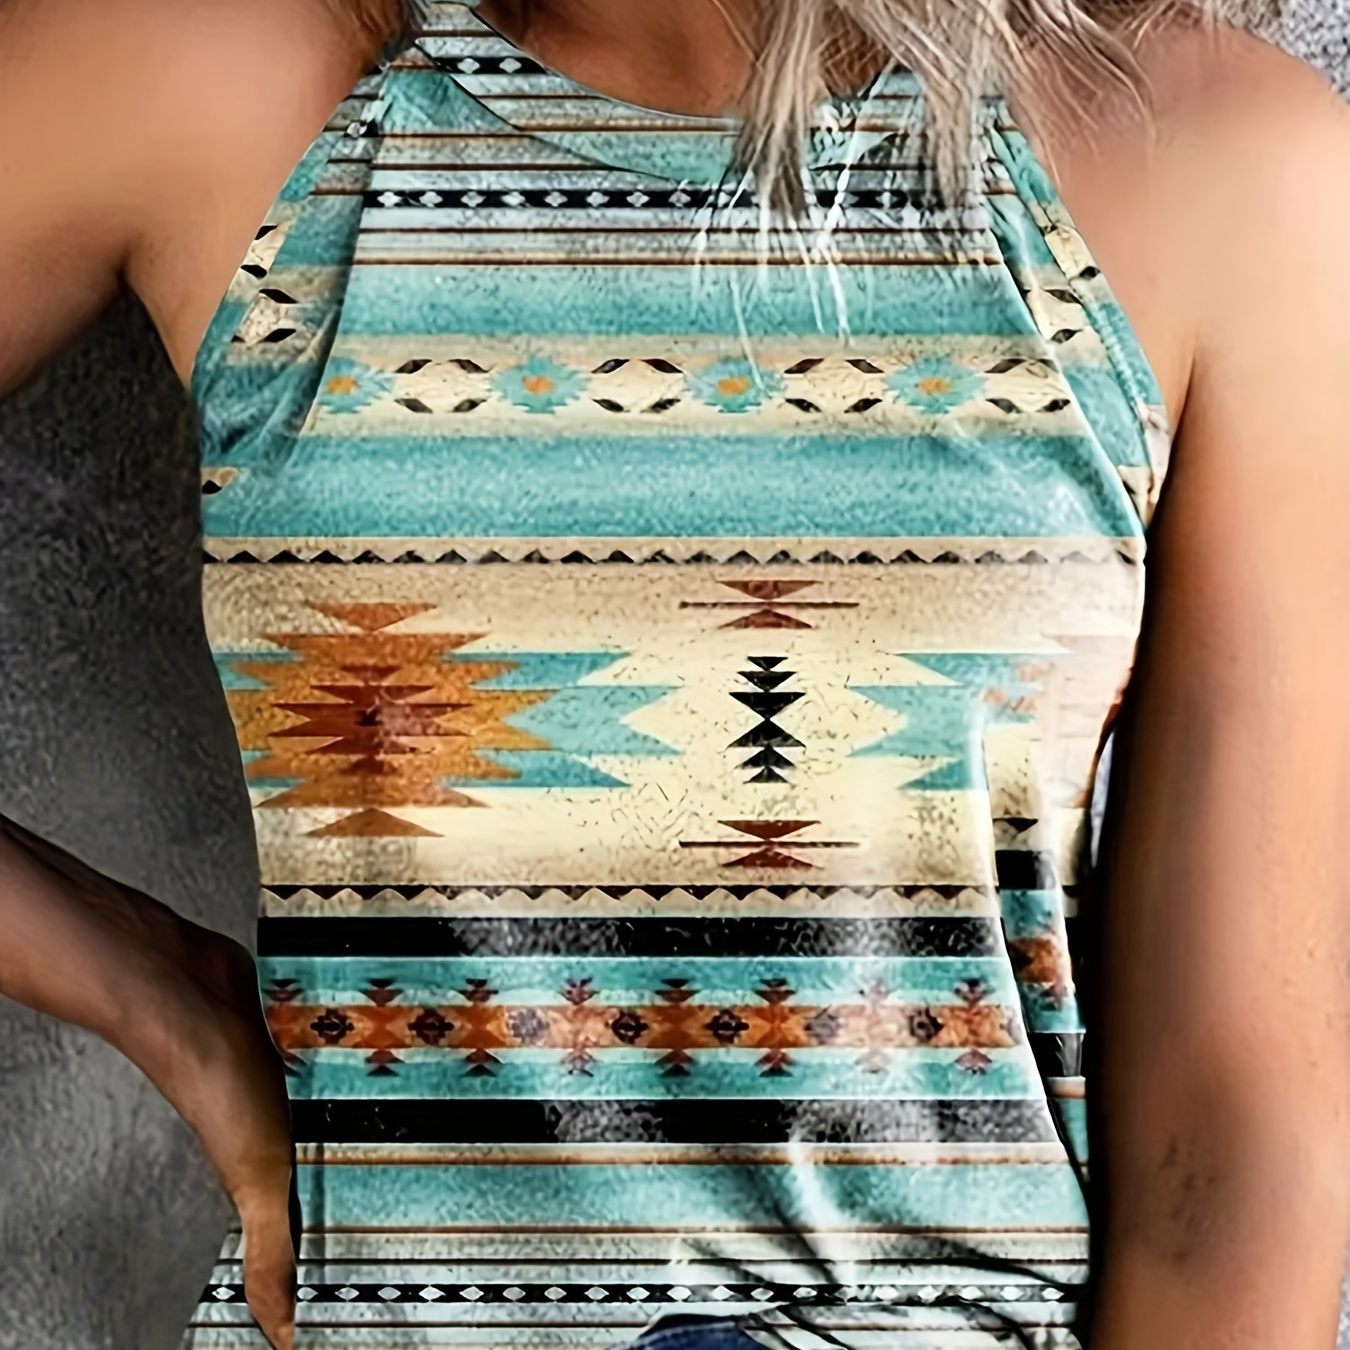 

Aztec Print Sleeveless Top, Casual Crew Neck Comfy Summer Tank Top, Women's Clothing